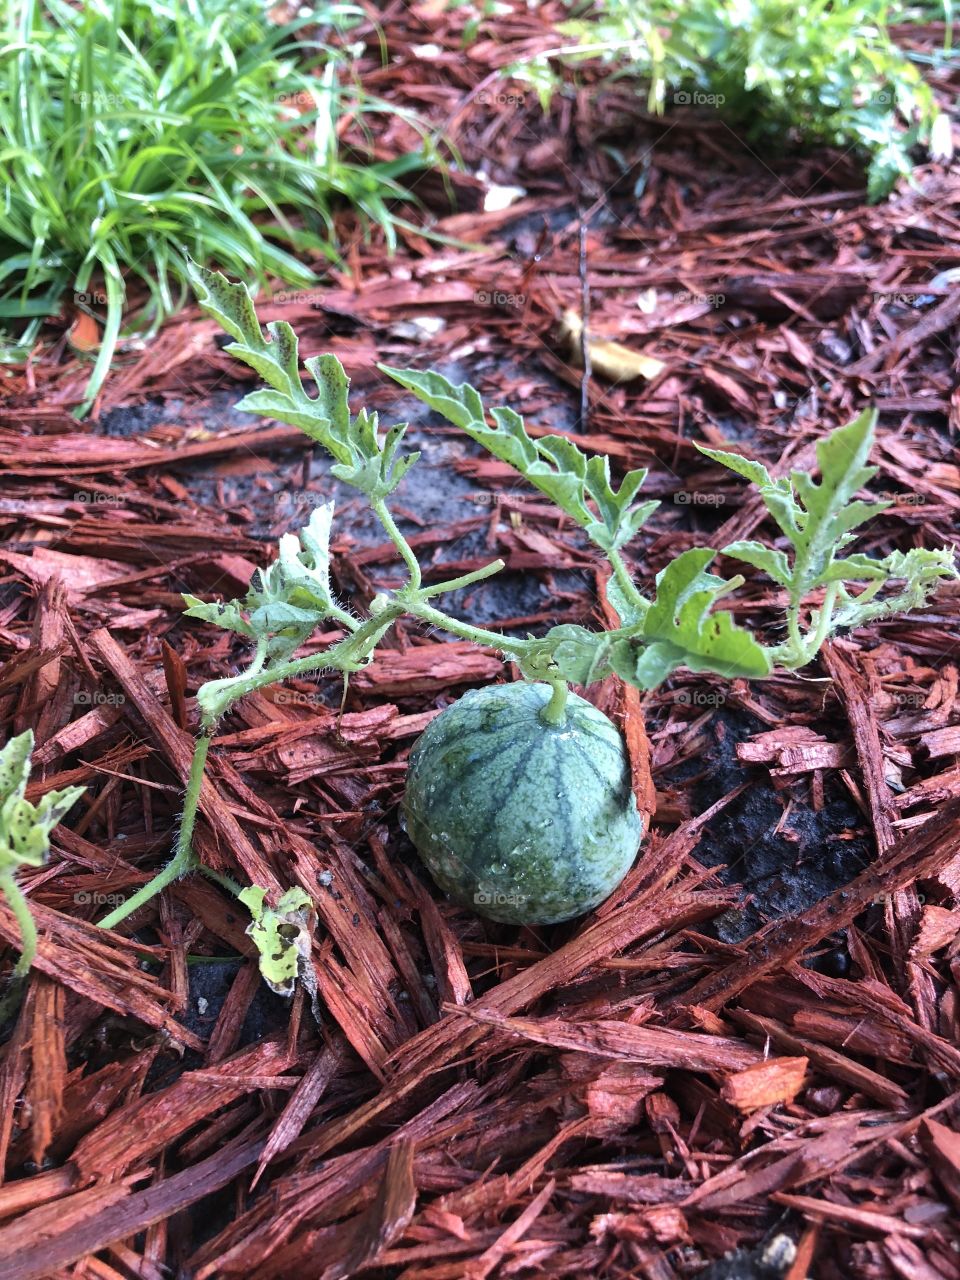 Baby watermelon 